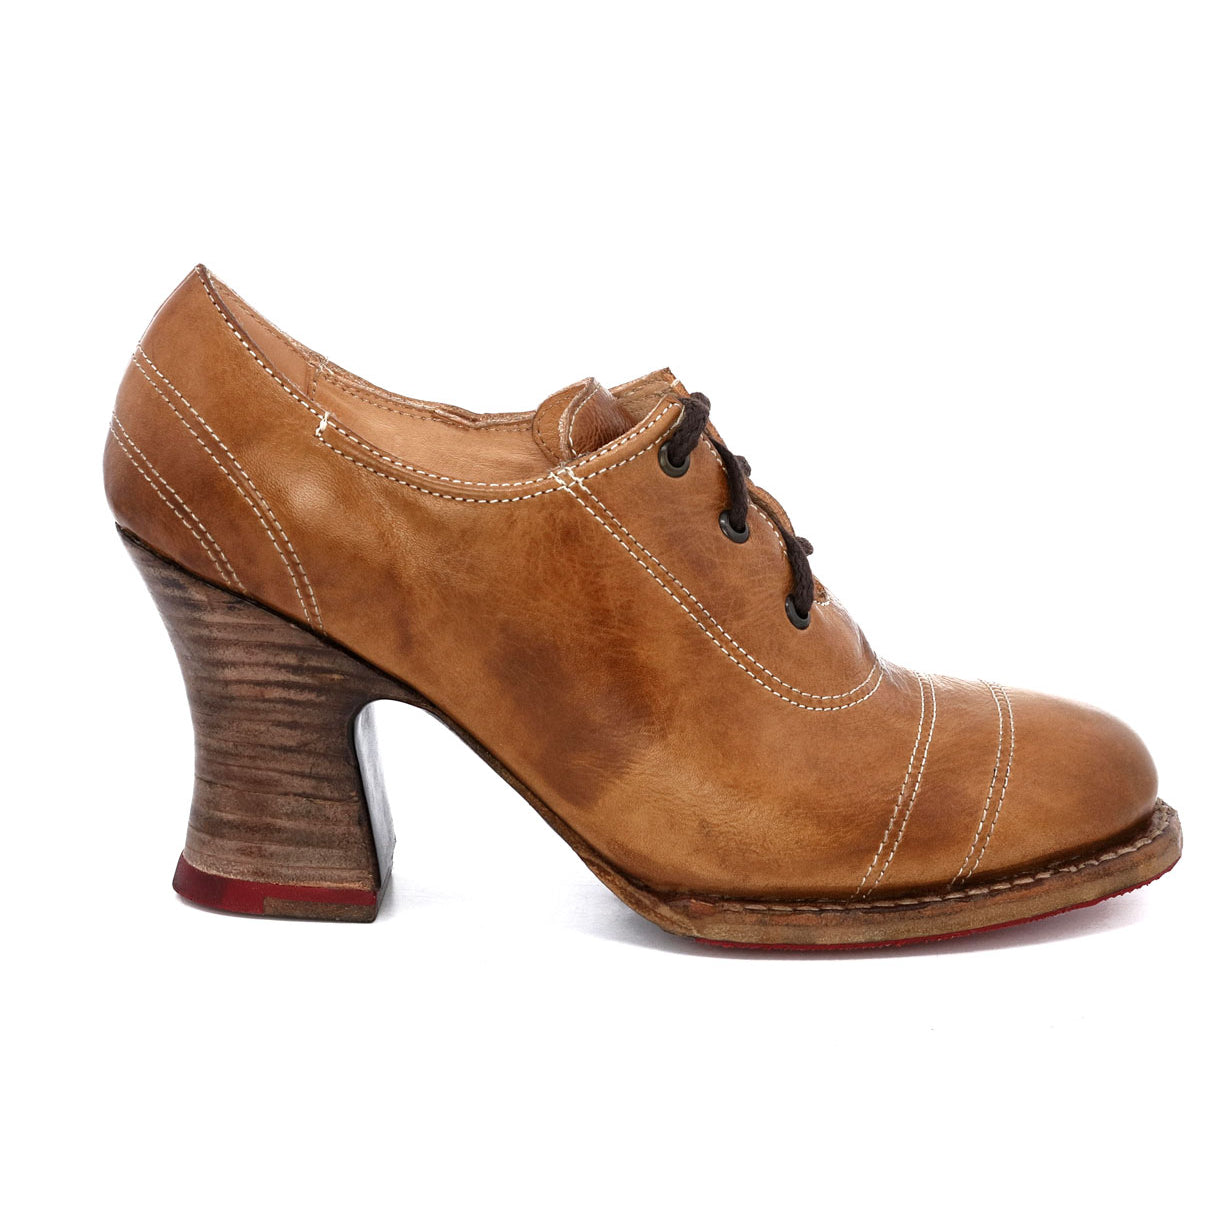 An enchanting women's brown Nanny oxford shoe with a wooden heel by Oak Tree Farms.